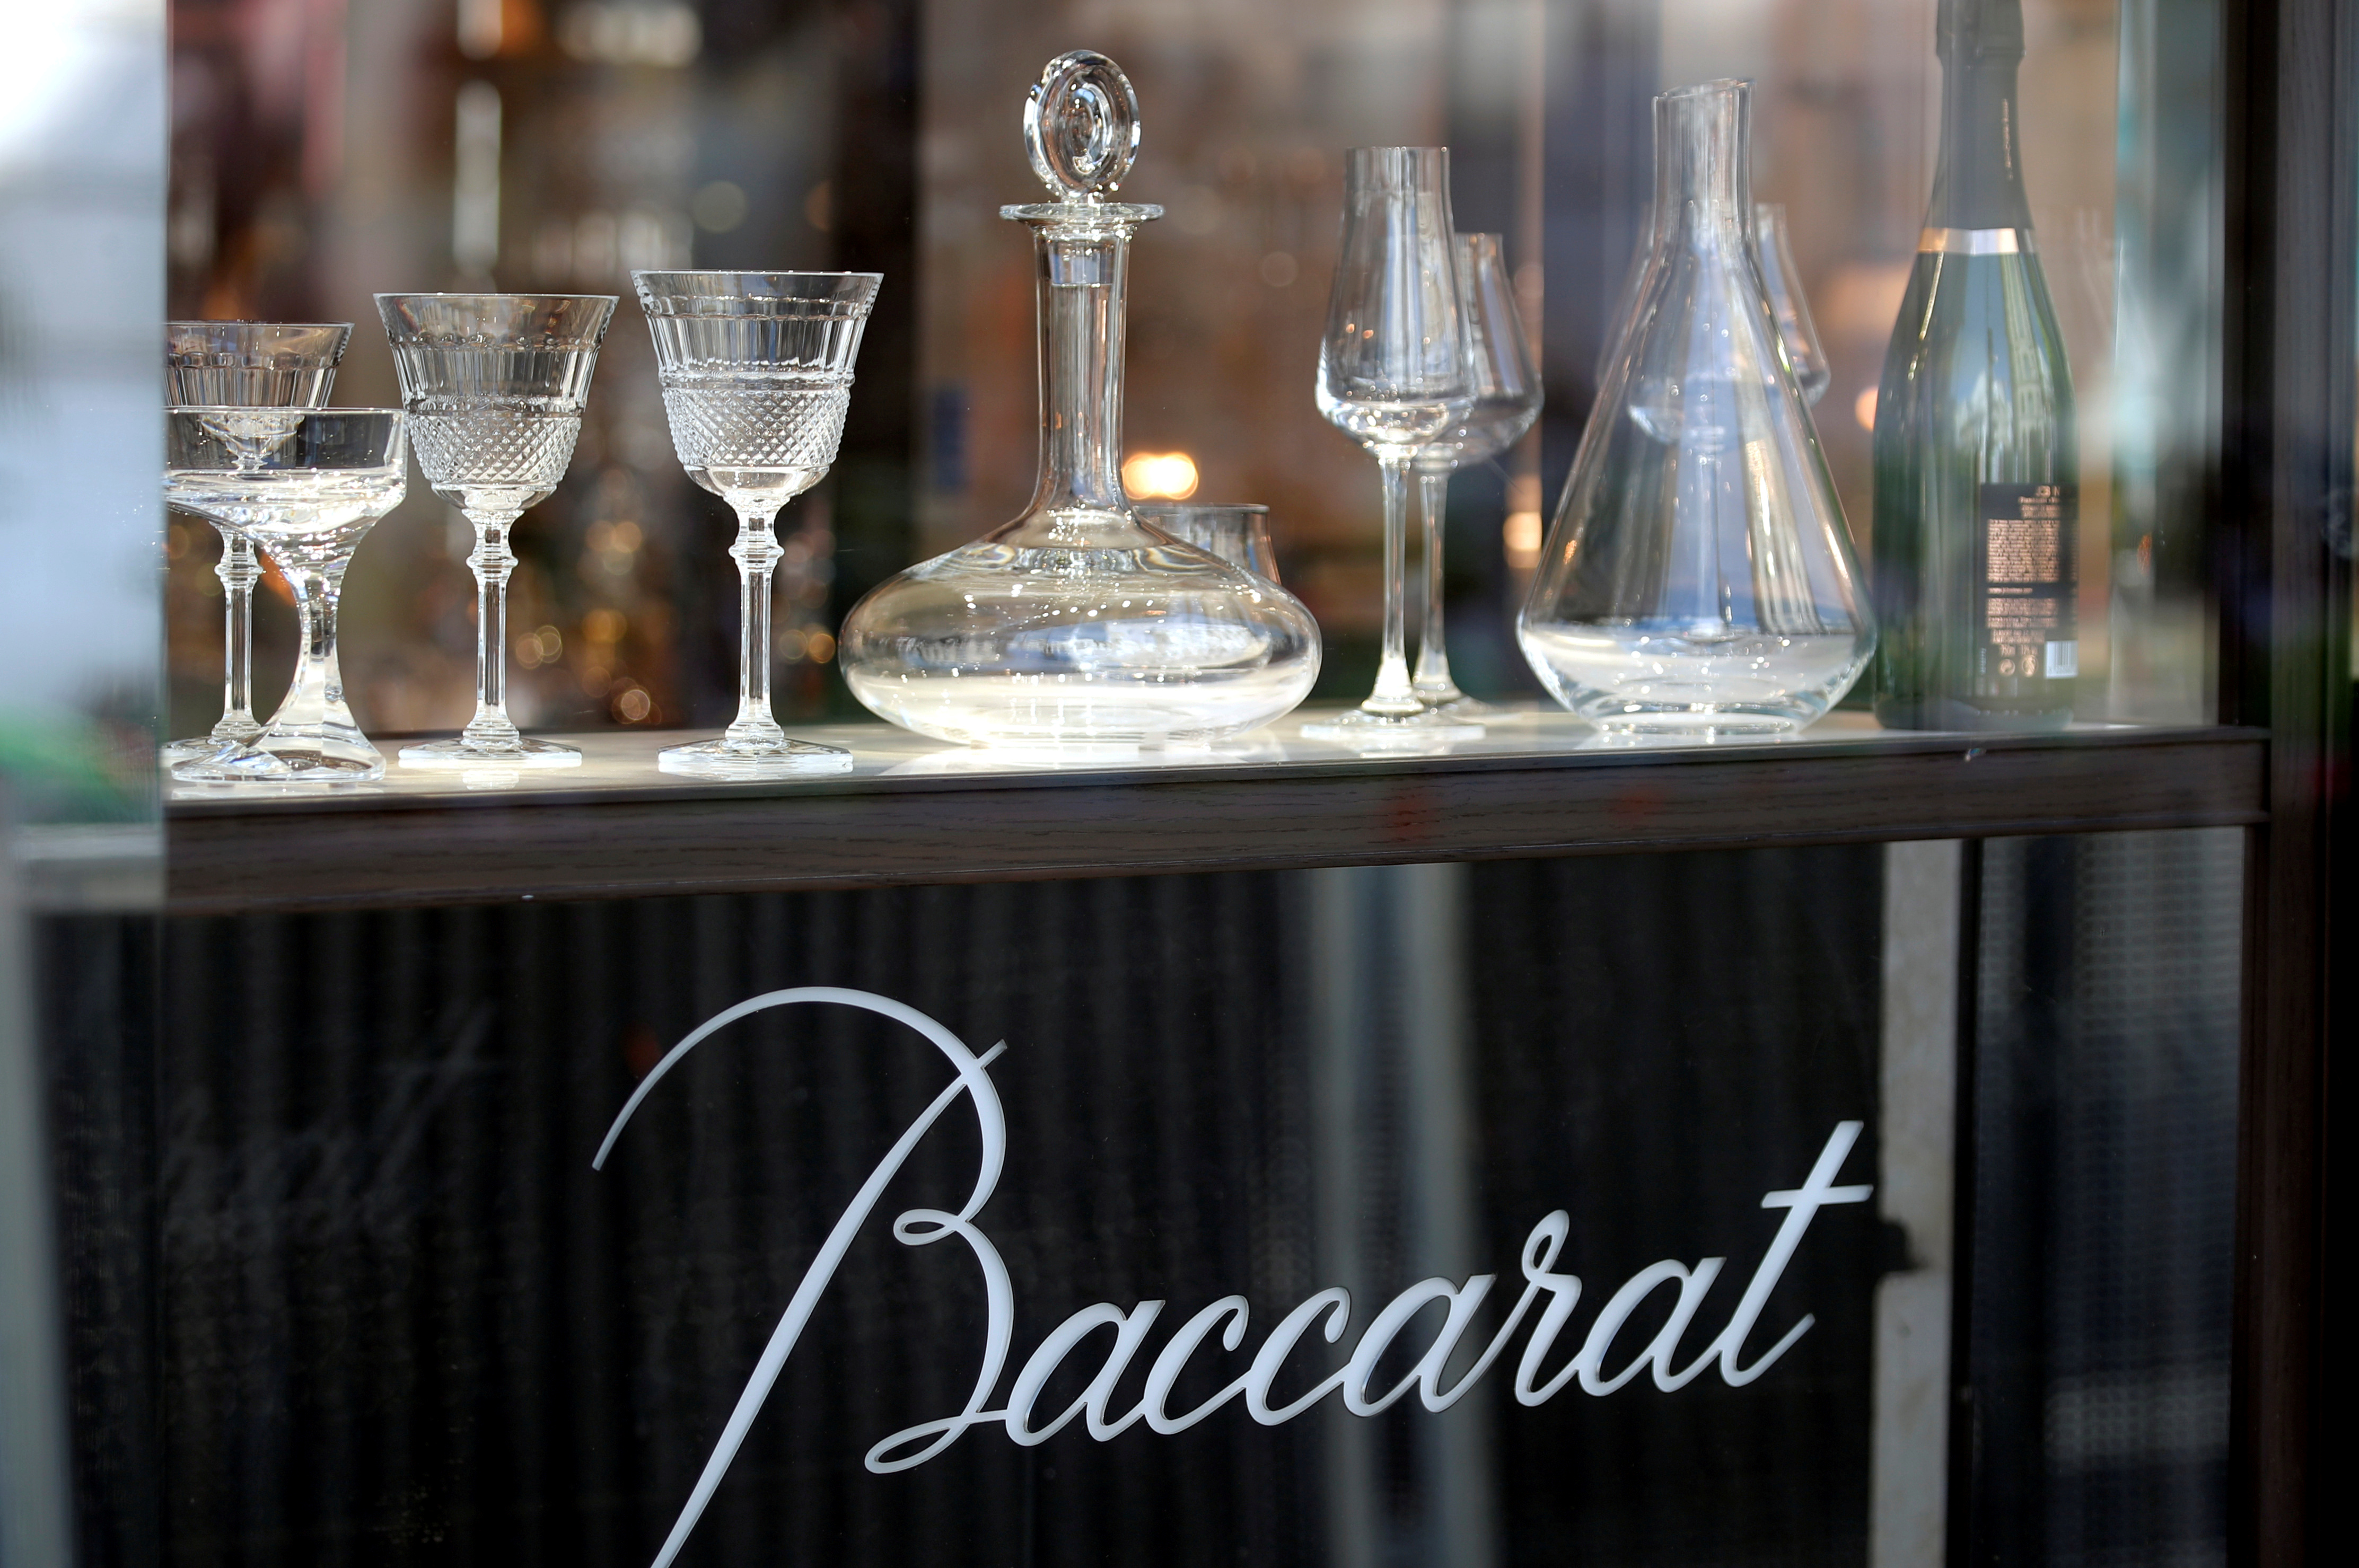 Baccarat store in Paris